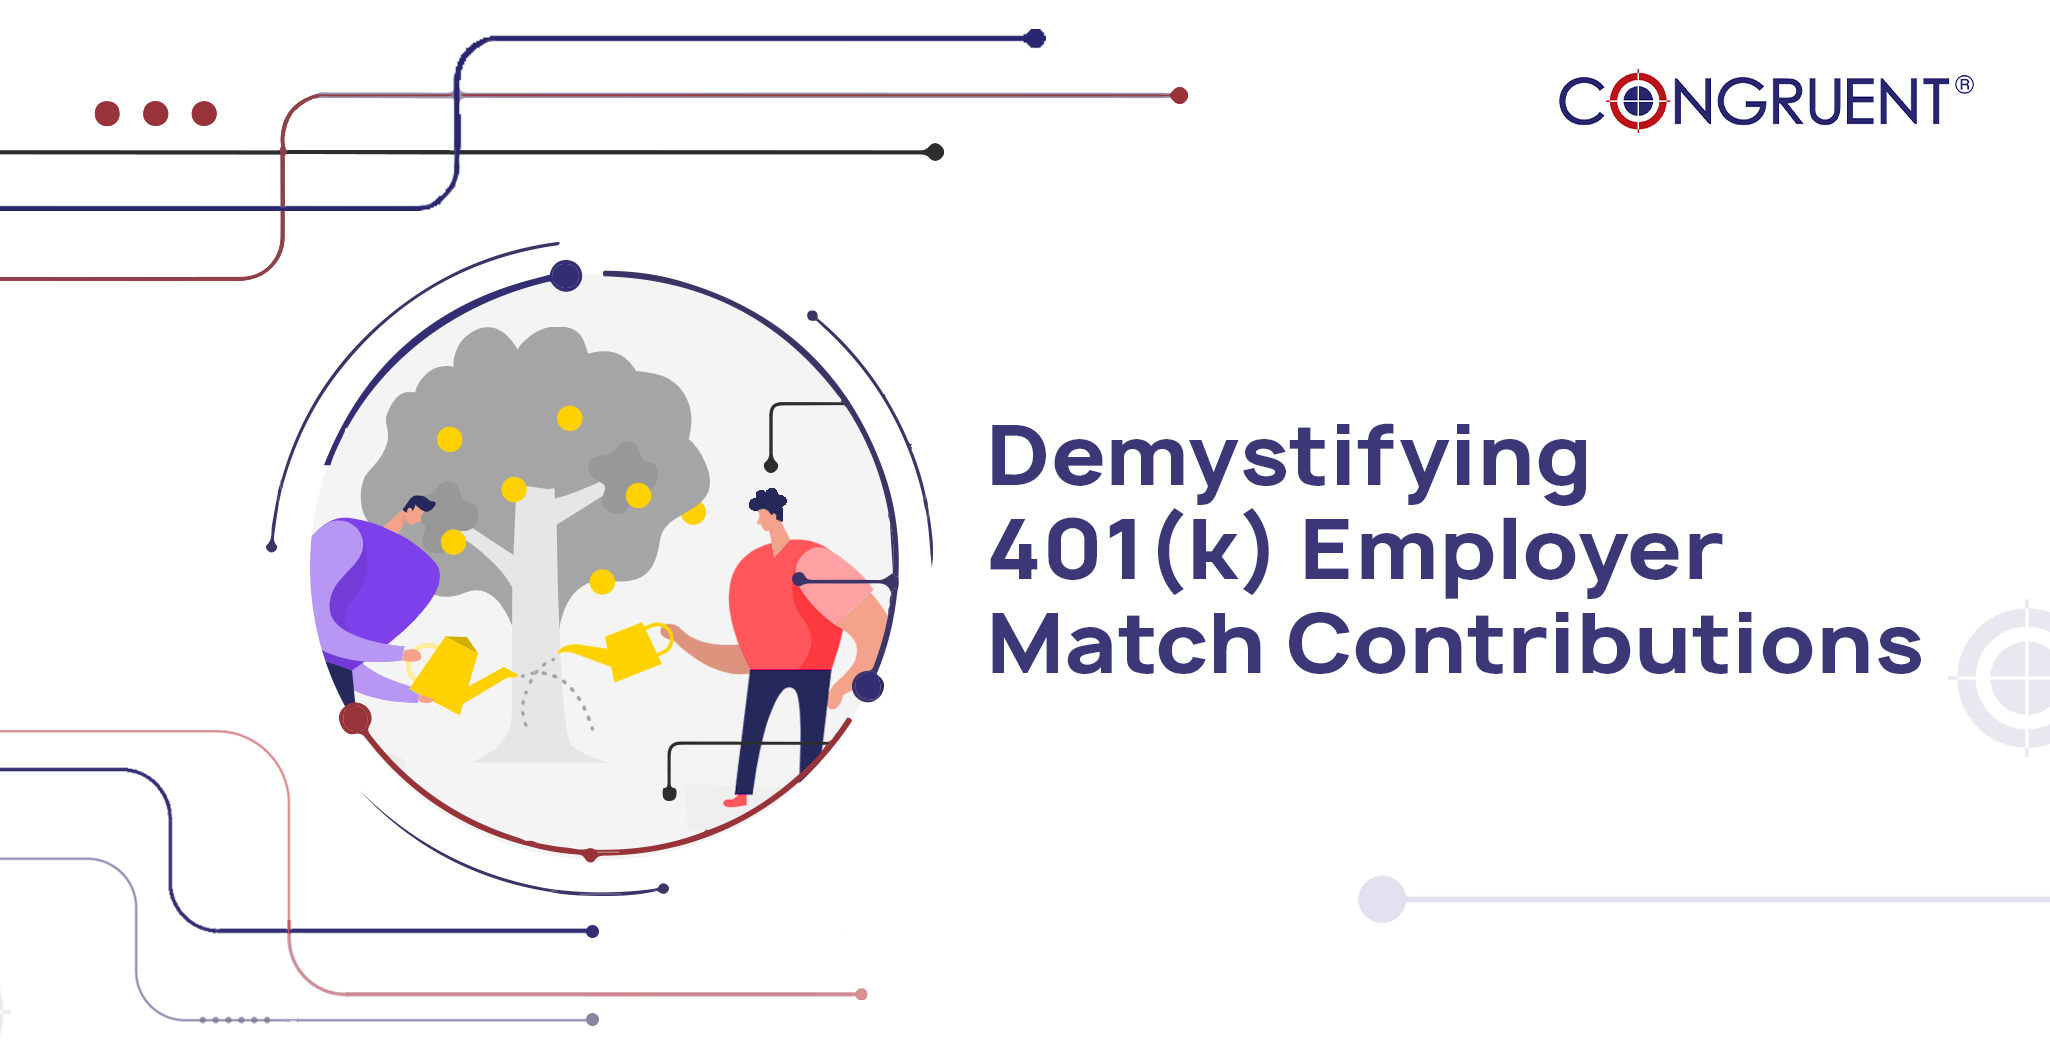 Demystifying 401(k) Employer Match Contributions